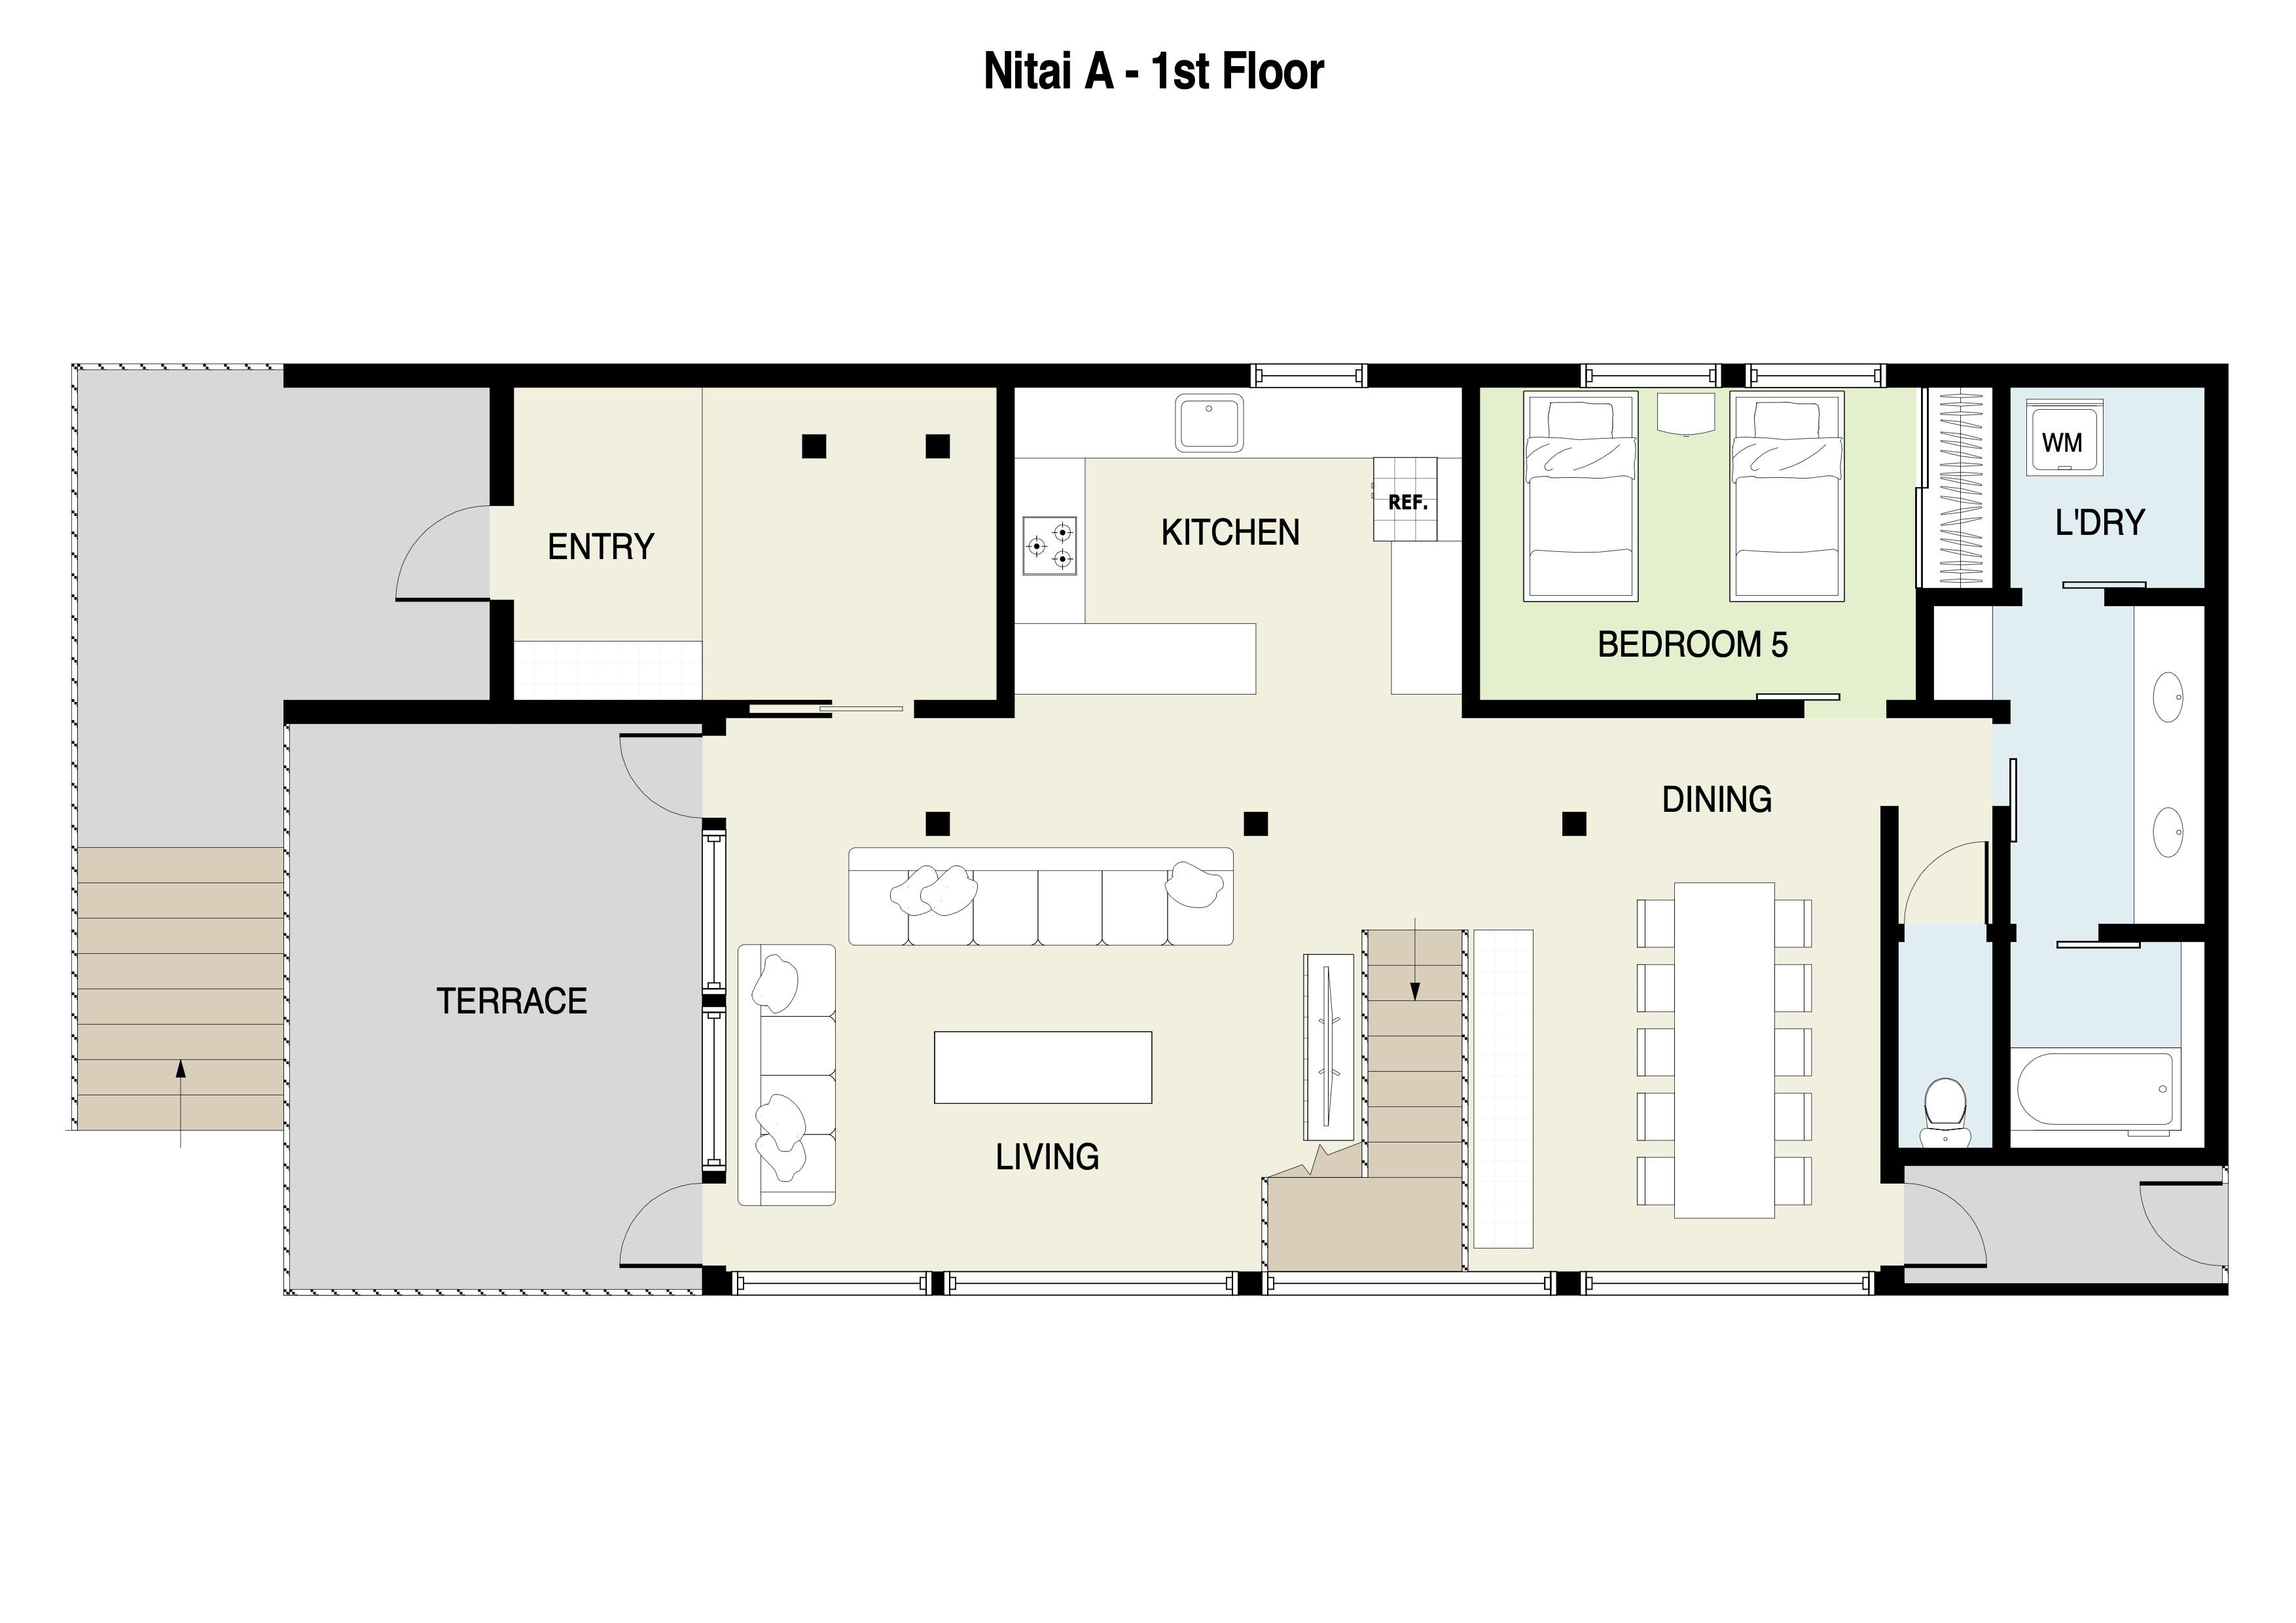 Nitai A 1st floor plans